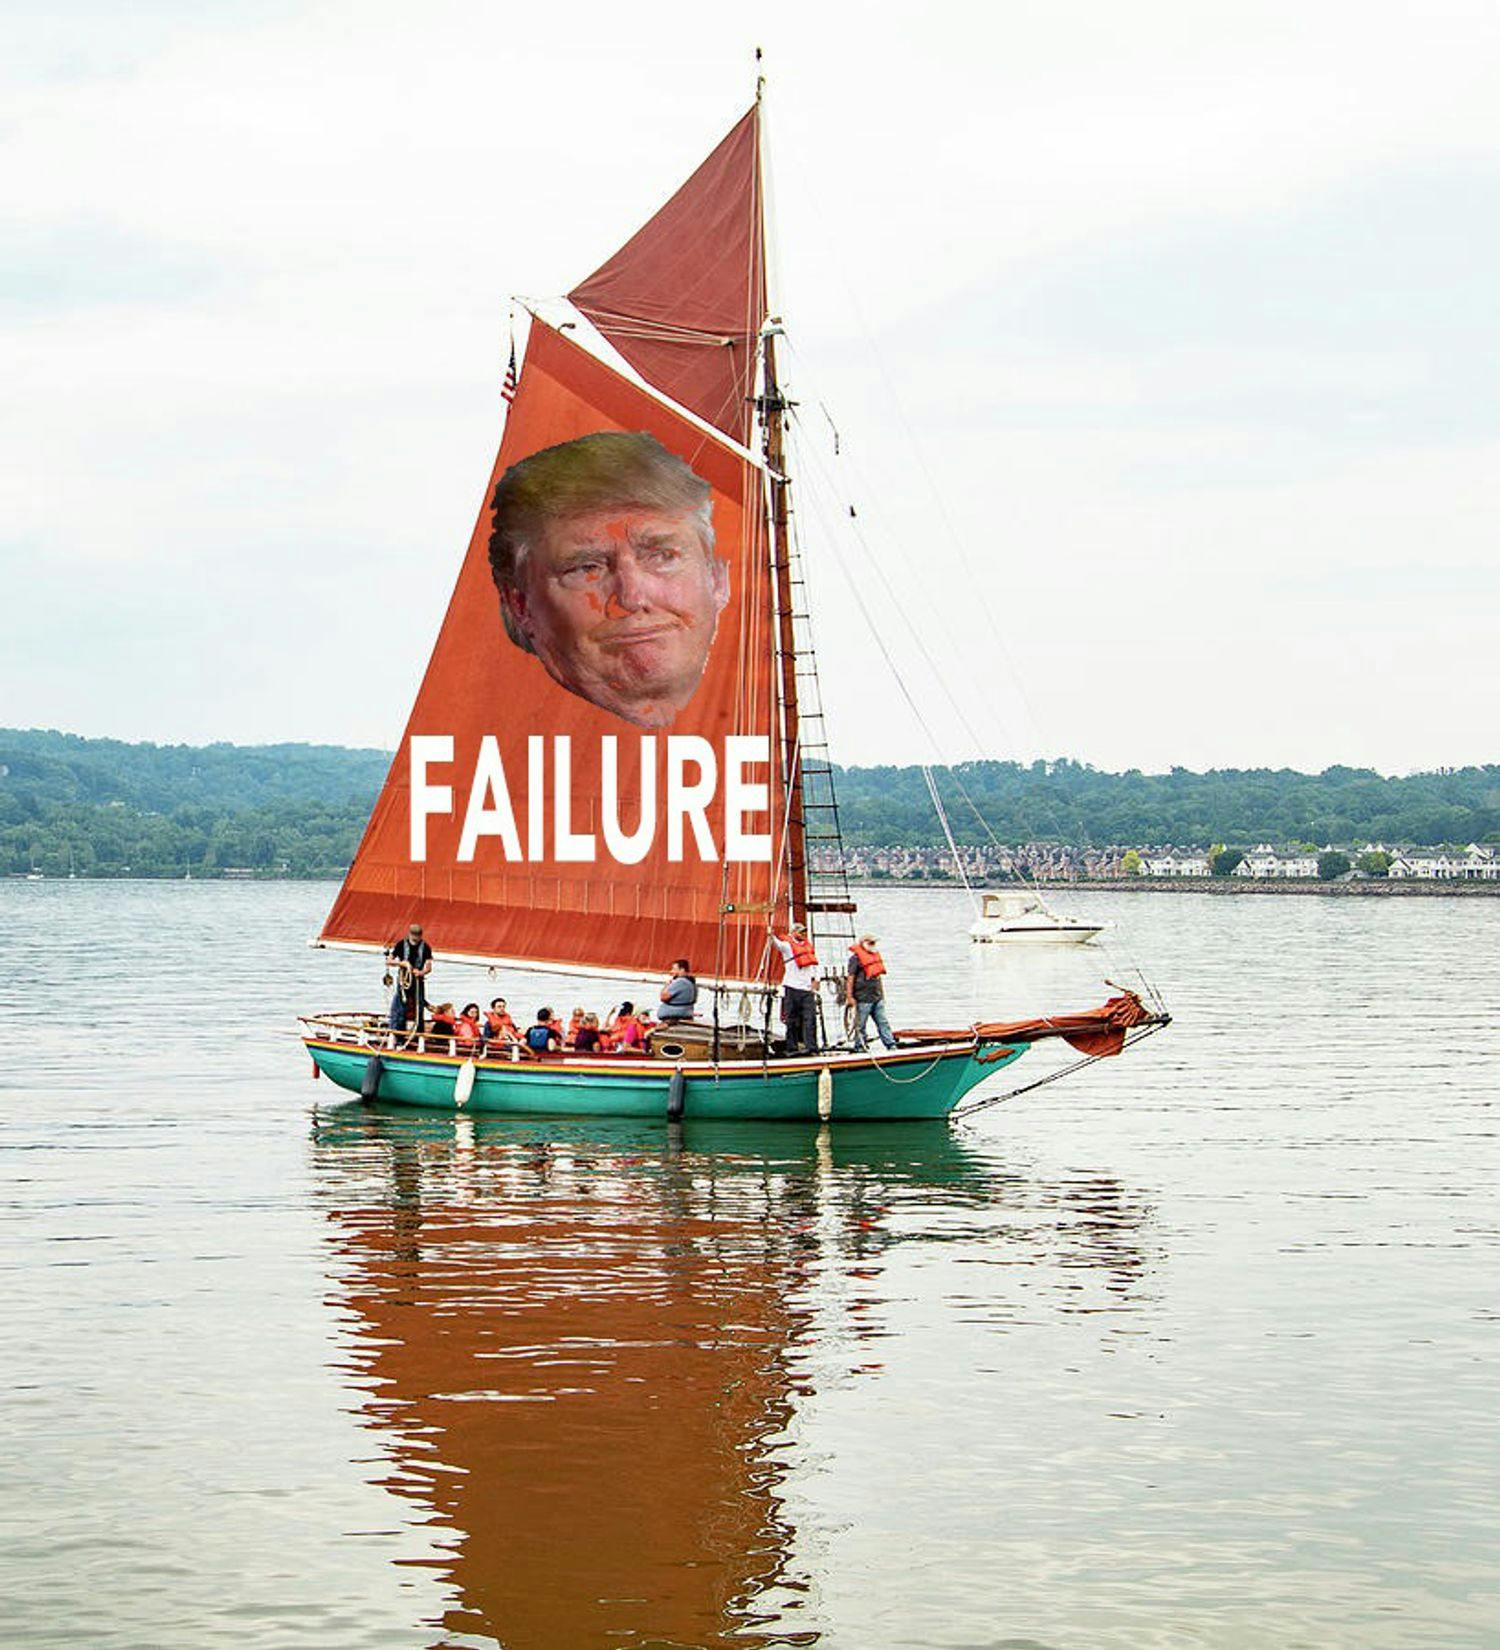 Anti-Trump Protest Flotilla